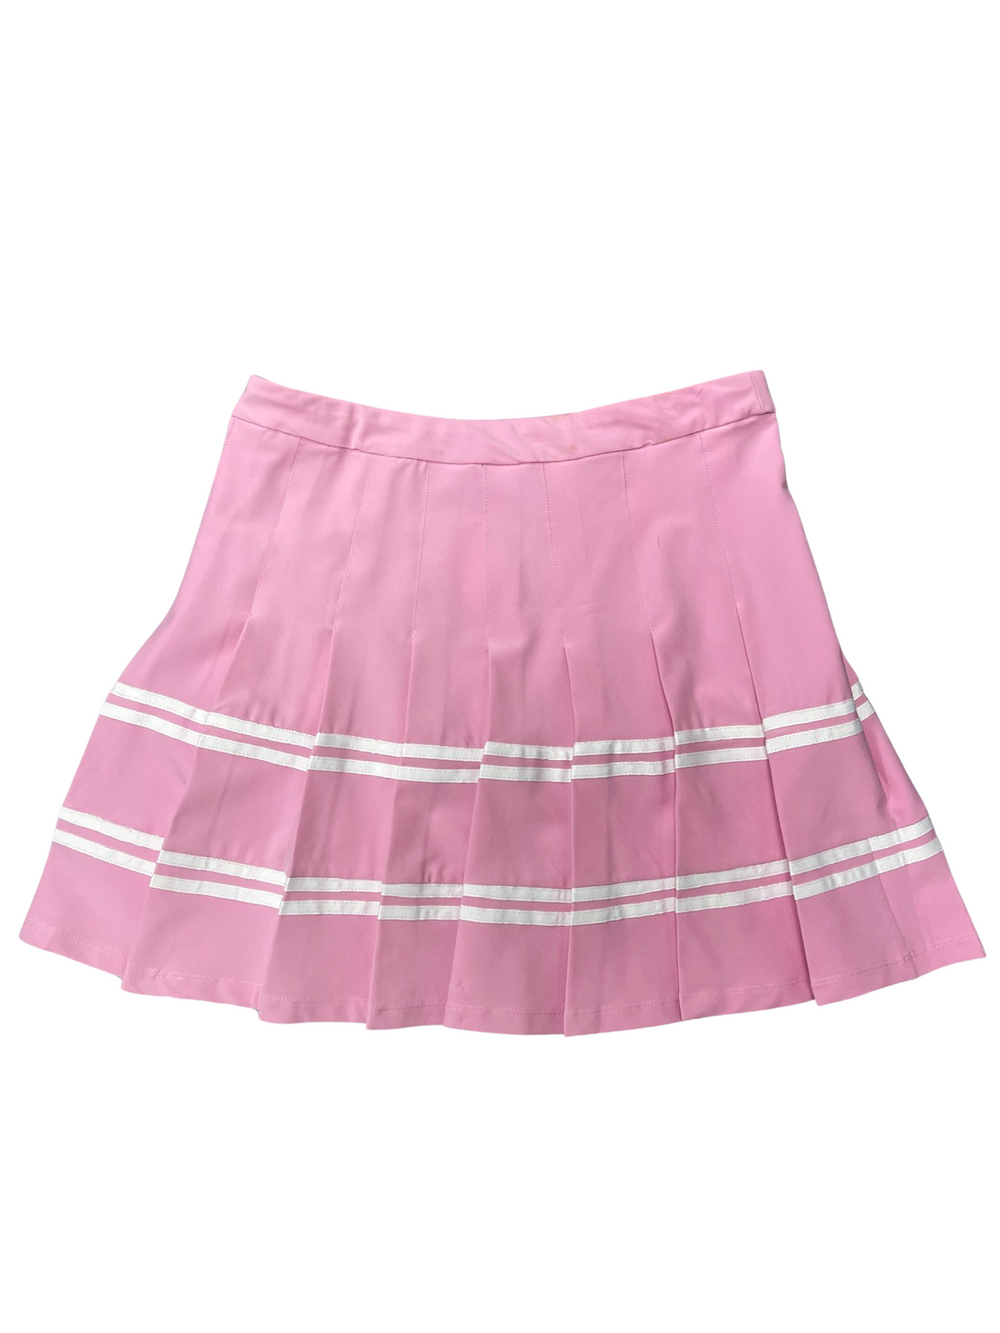 Tail Pleated Skort - Pink with White Varsity Stripes - Size 12 - Skorzie